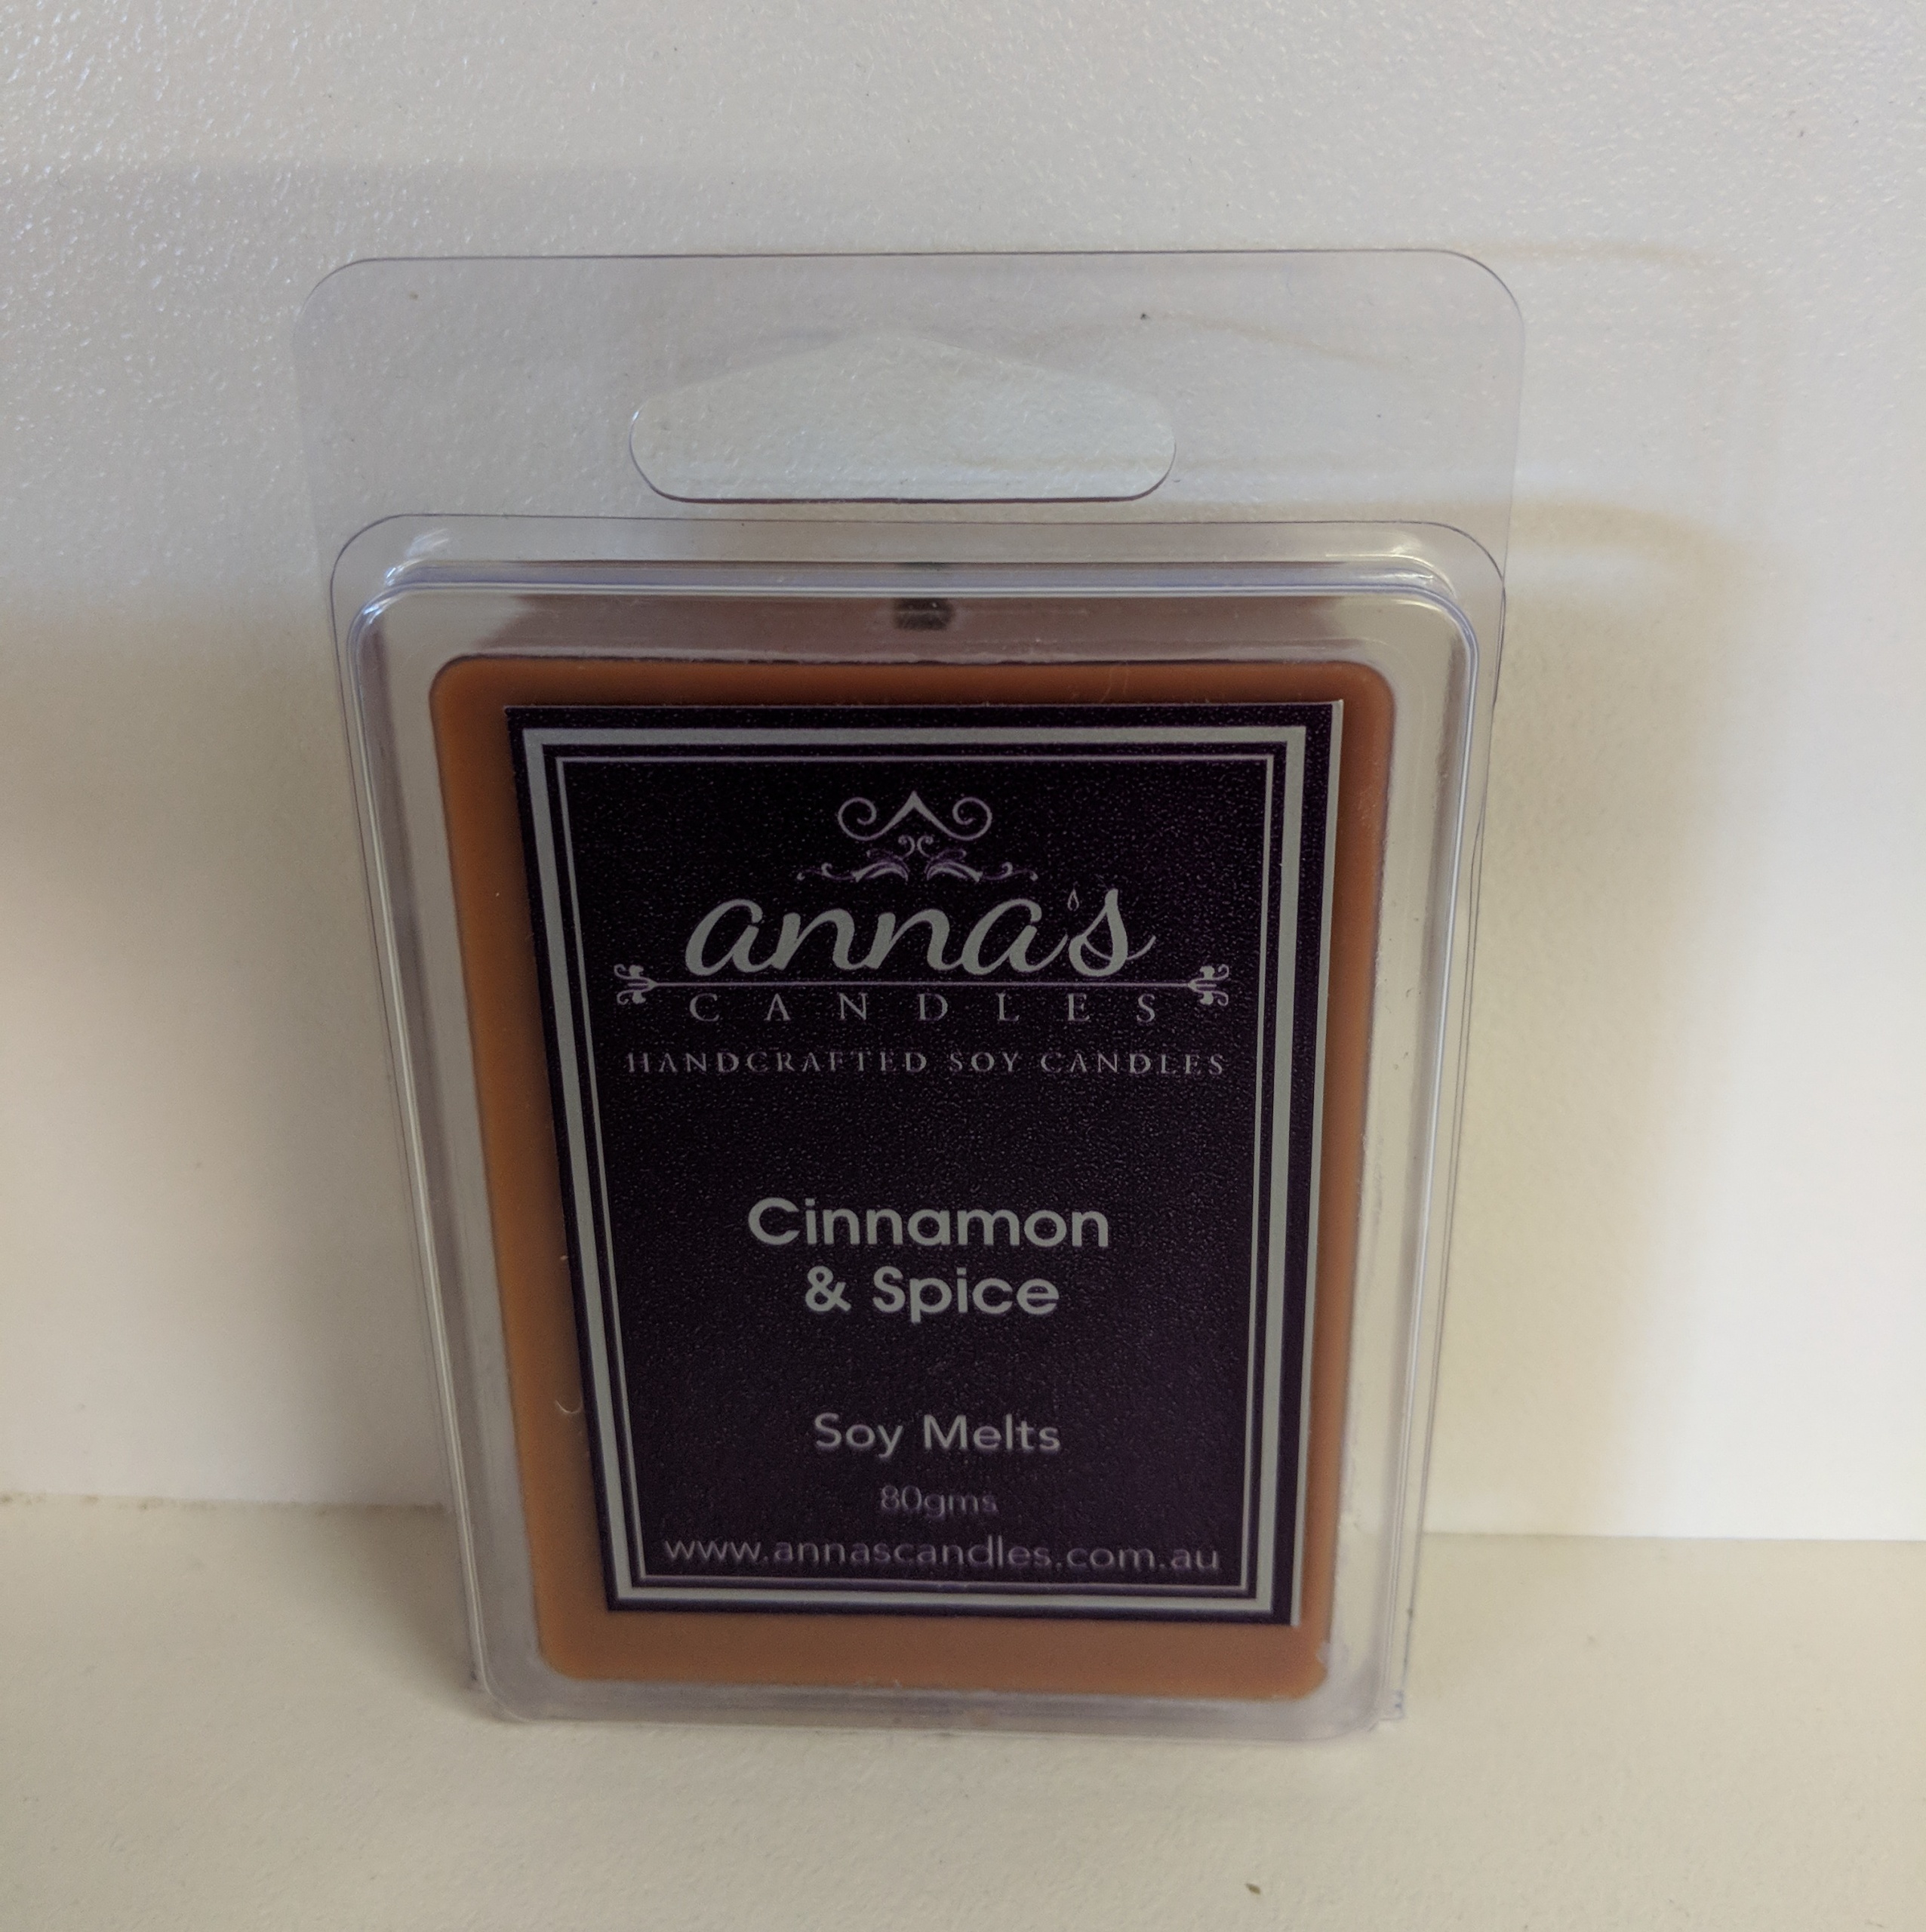 Cinnamon and Spice Soy wax melt packs